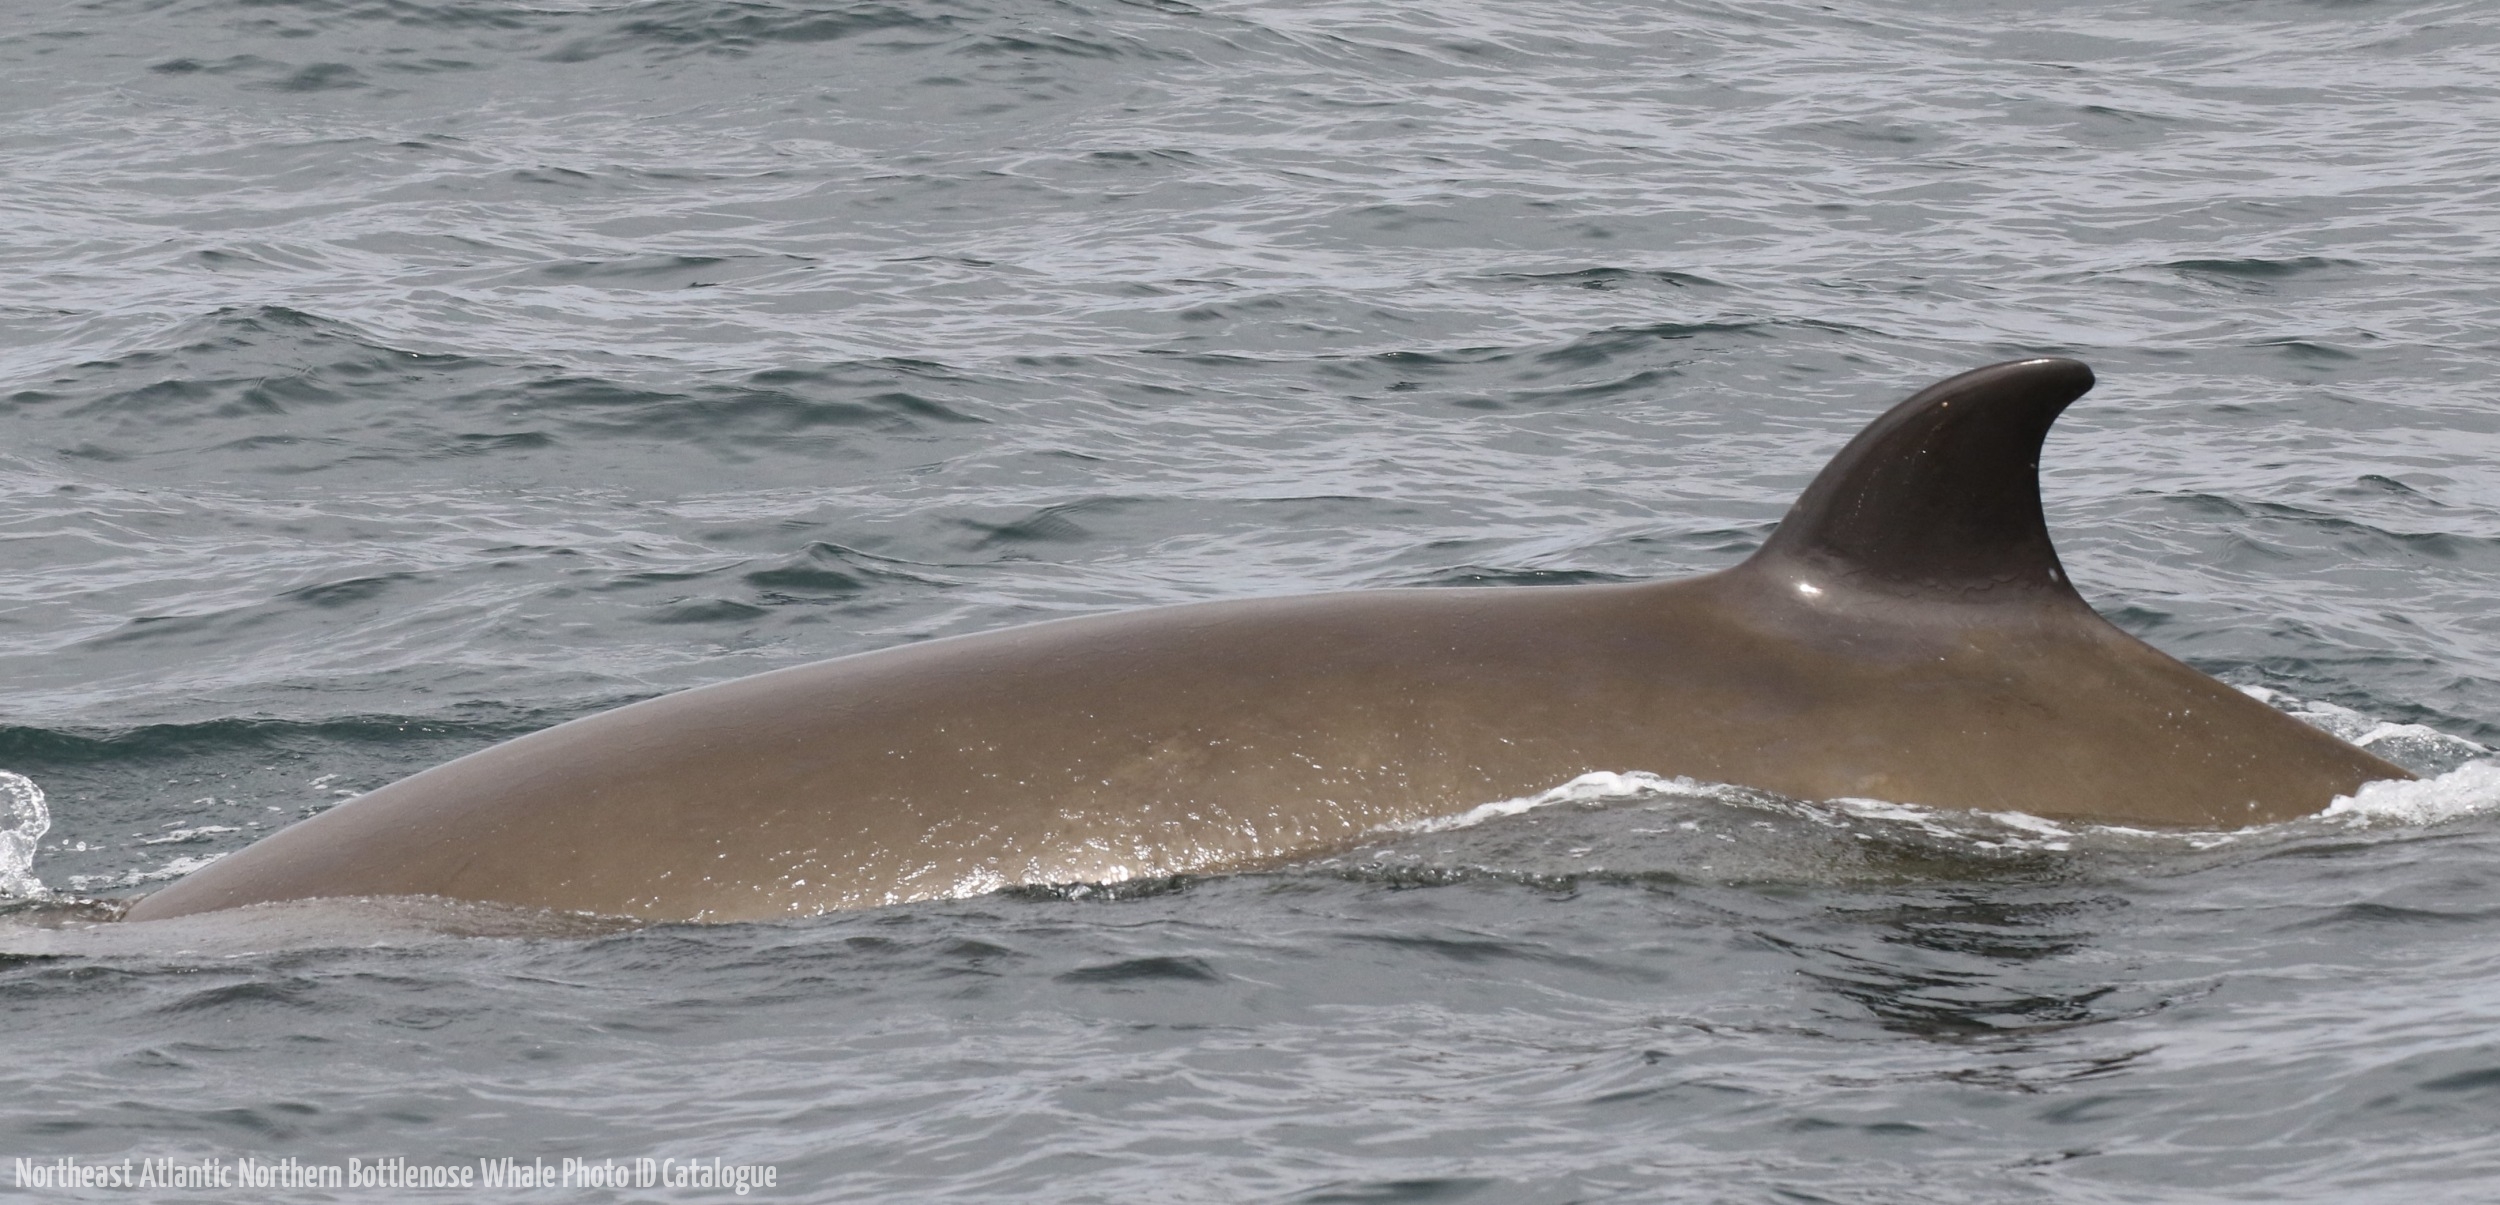 Whale ID: 0158,  Date taken: 14-06-2016,  Photographer: Naomi Boon